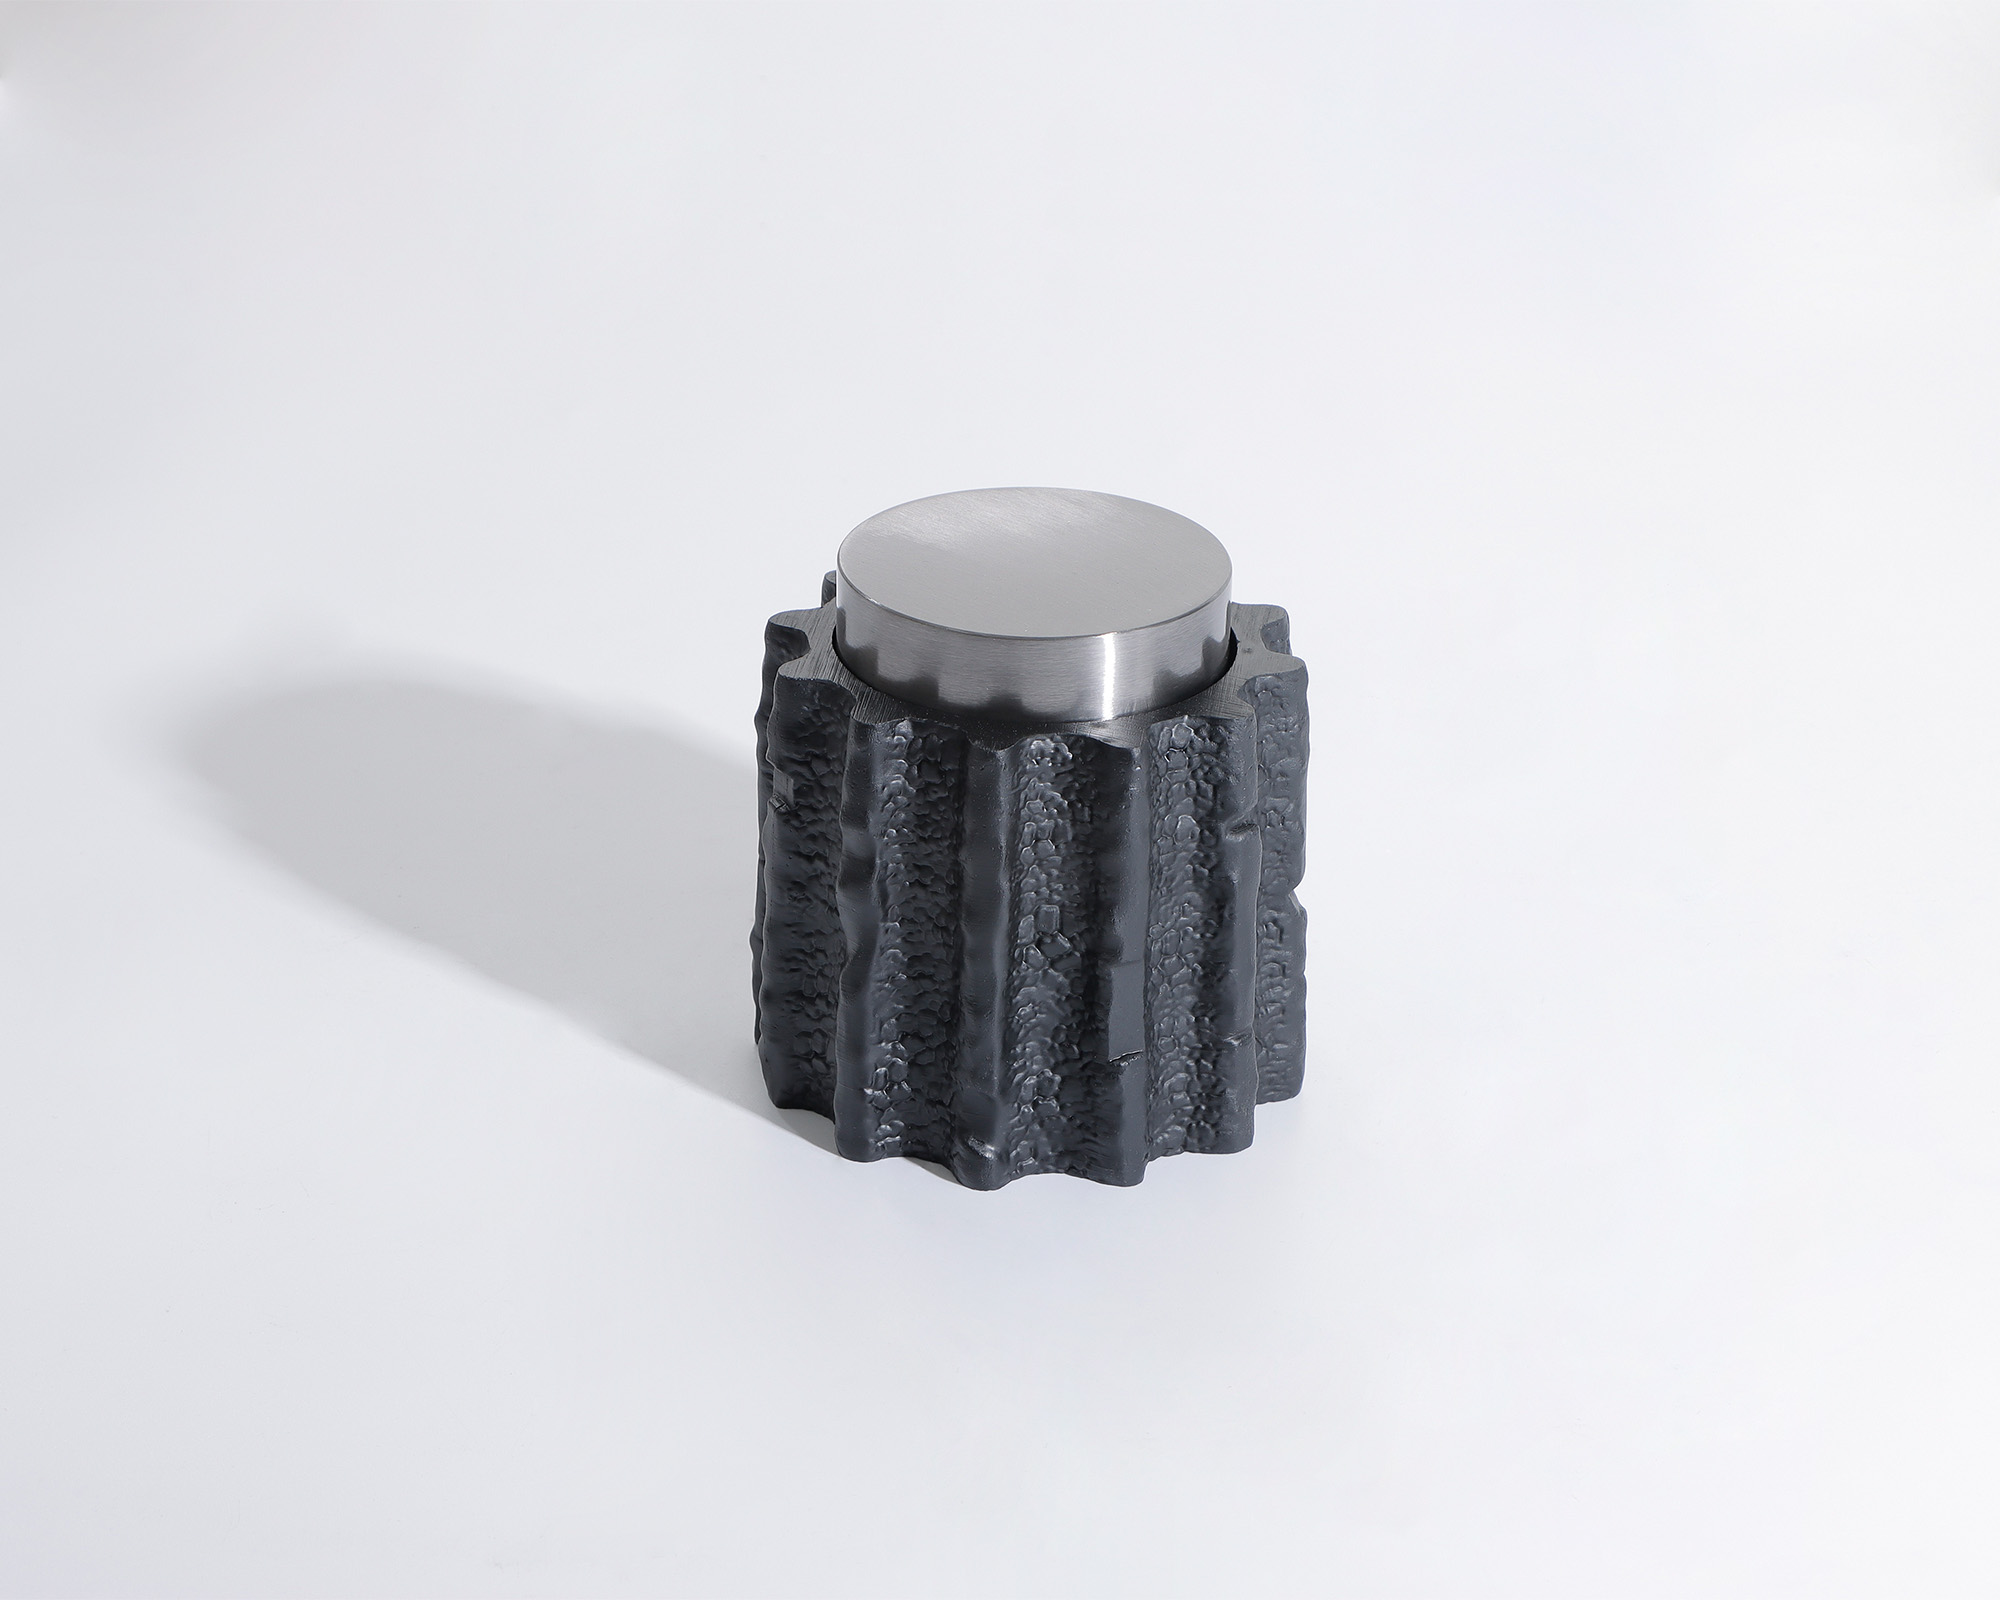 LE020-ACSR-215_L&E_Meteorite Jar Small_2000 x 1600_2